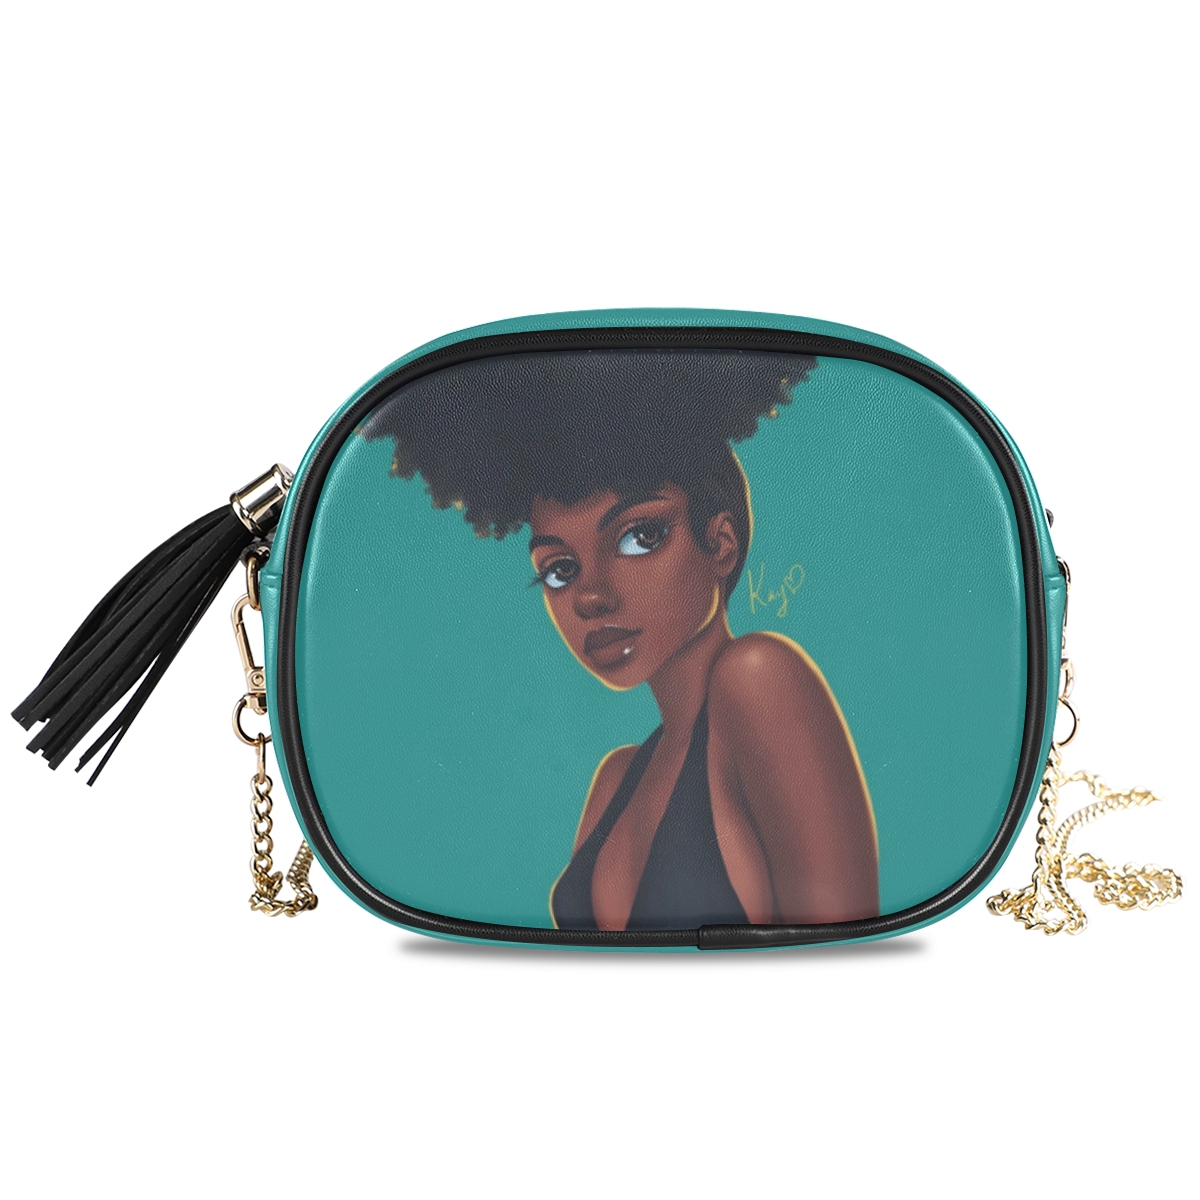 New Shoulder crossbody bag women bags 2020 PU Leather Chain bags Afro Girls black Women Messenger Bag Small Square purse Bags